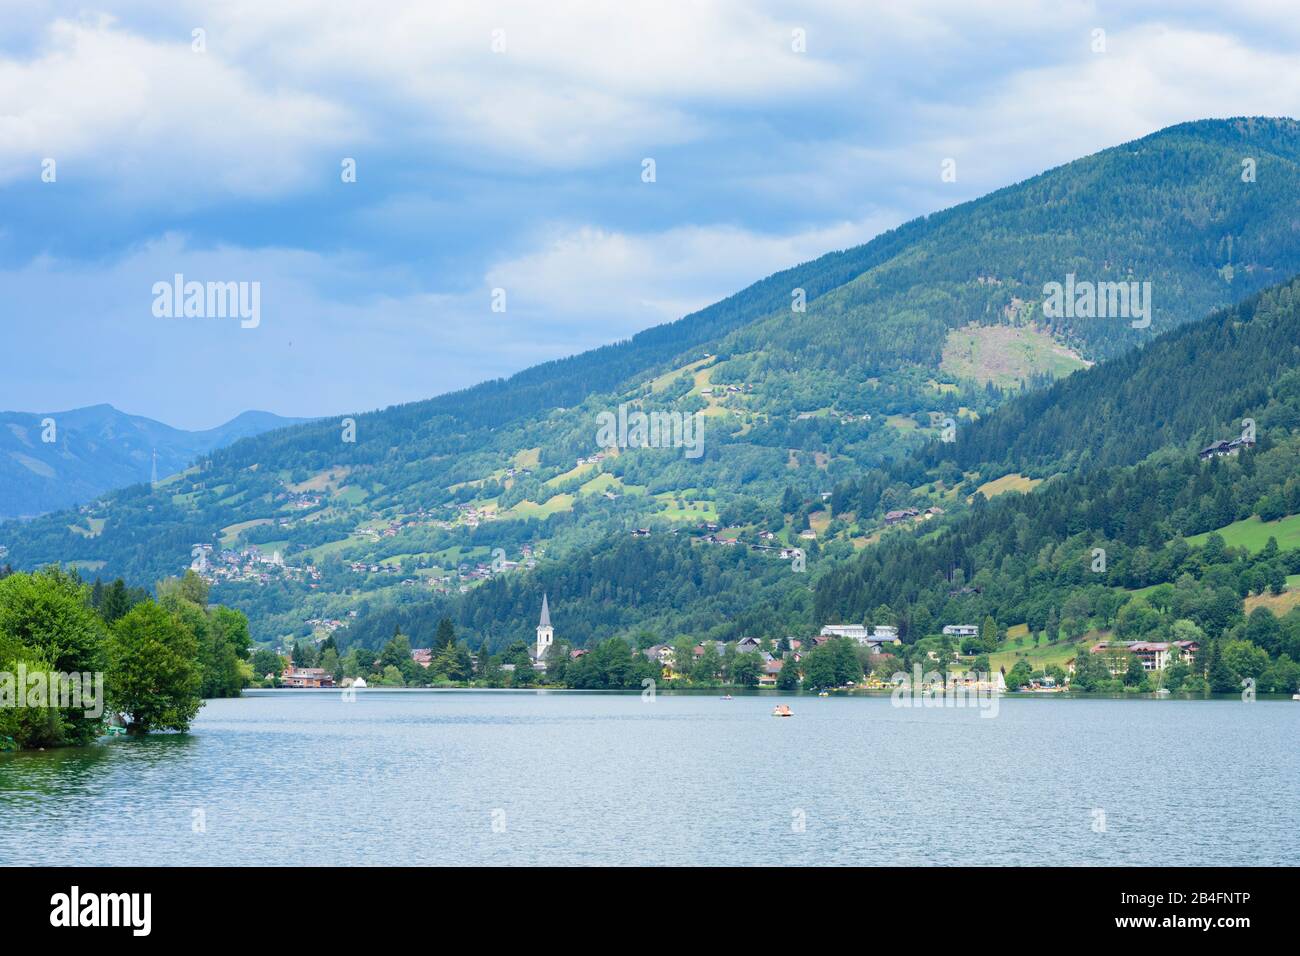 Feld am See, lake Brennsee, village Feld am See in Kärnten / Carinthia, Austria Stock Photo